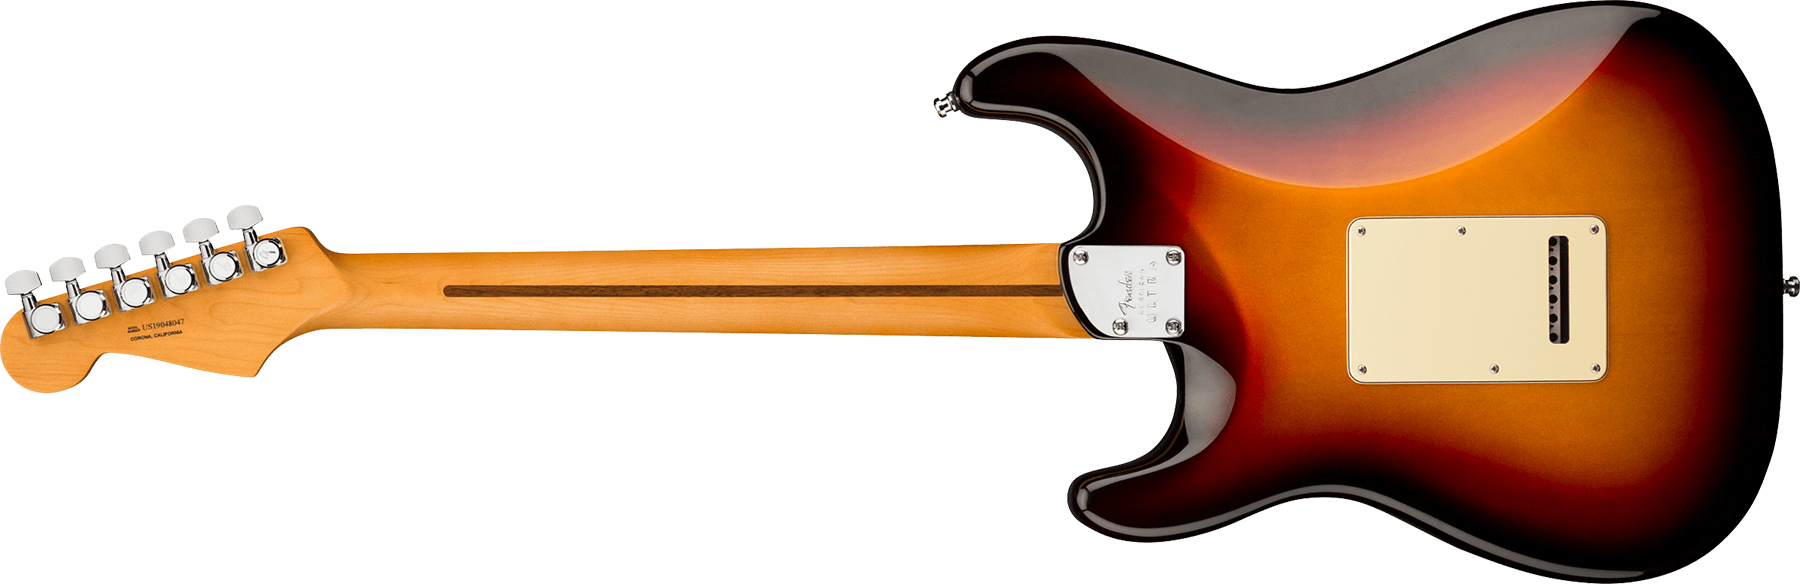 Fender Strat American Ultra 2019 Usa Rw - Ultraburst - Str shape electric guitar - Variation 1